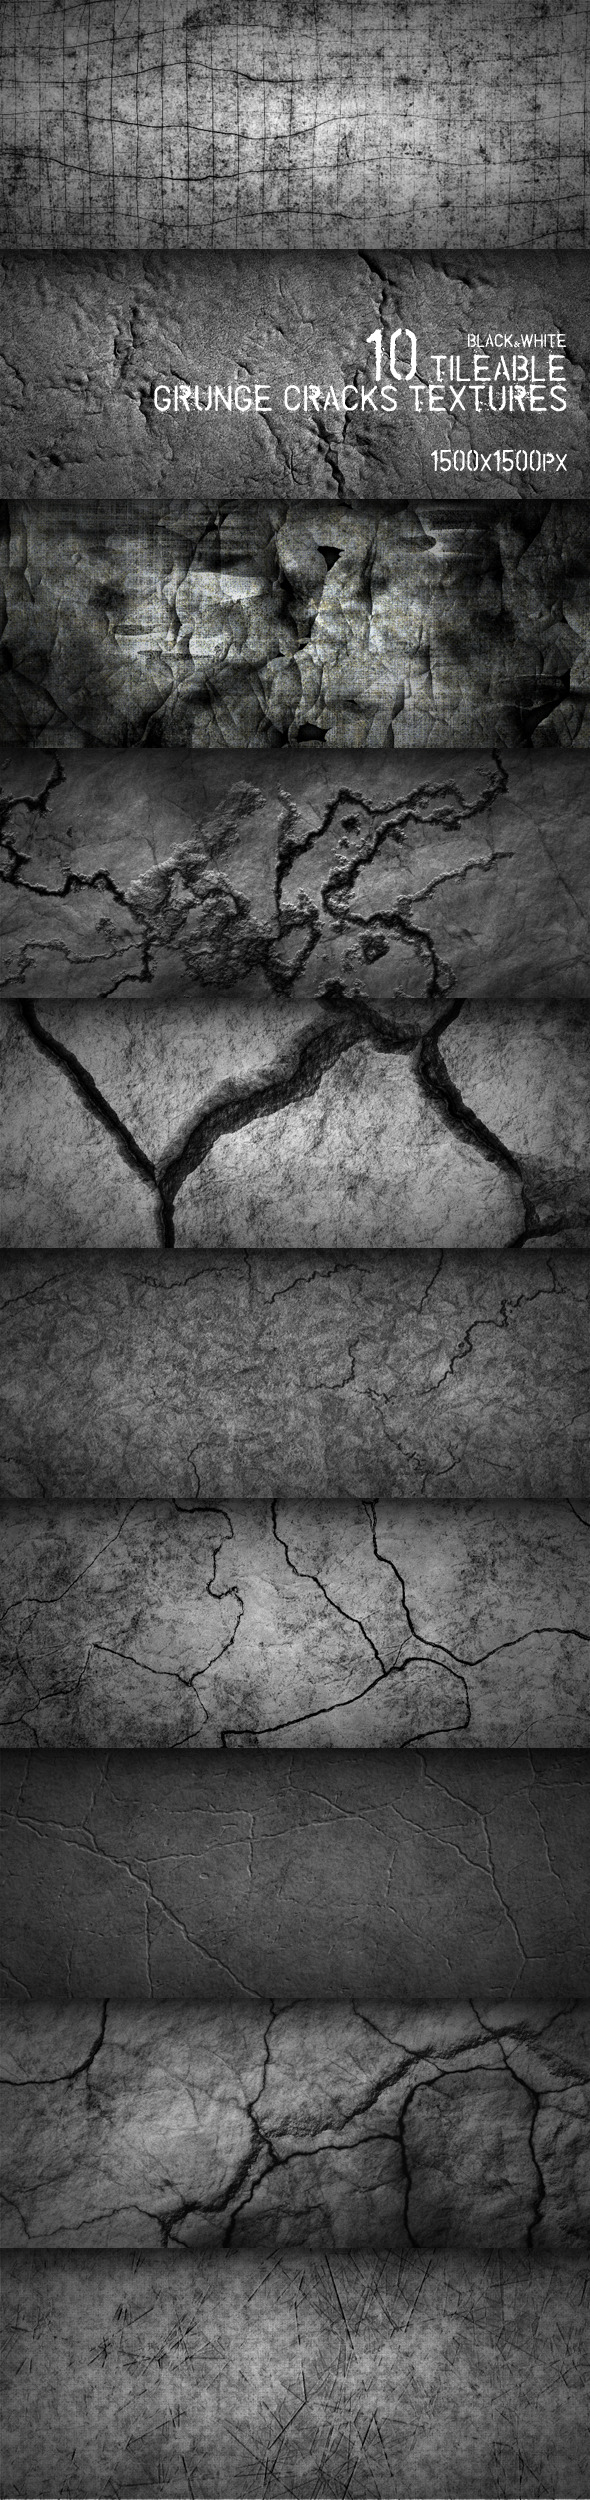 10 Tileable Grunge Cracks Textures